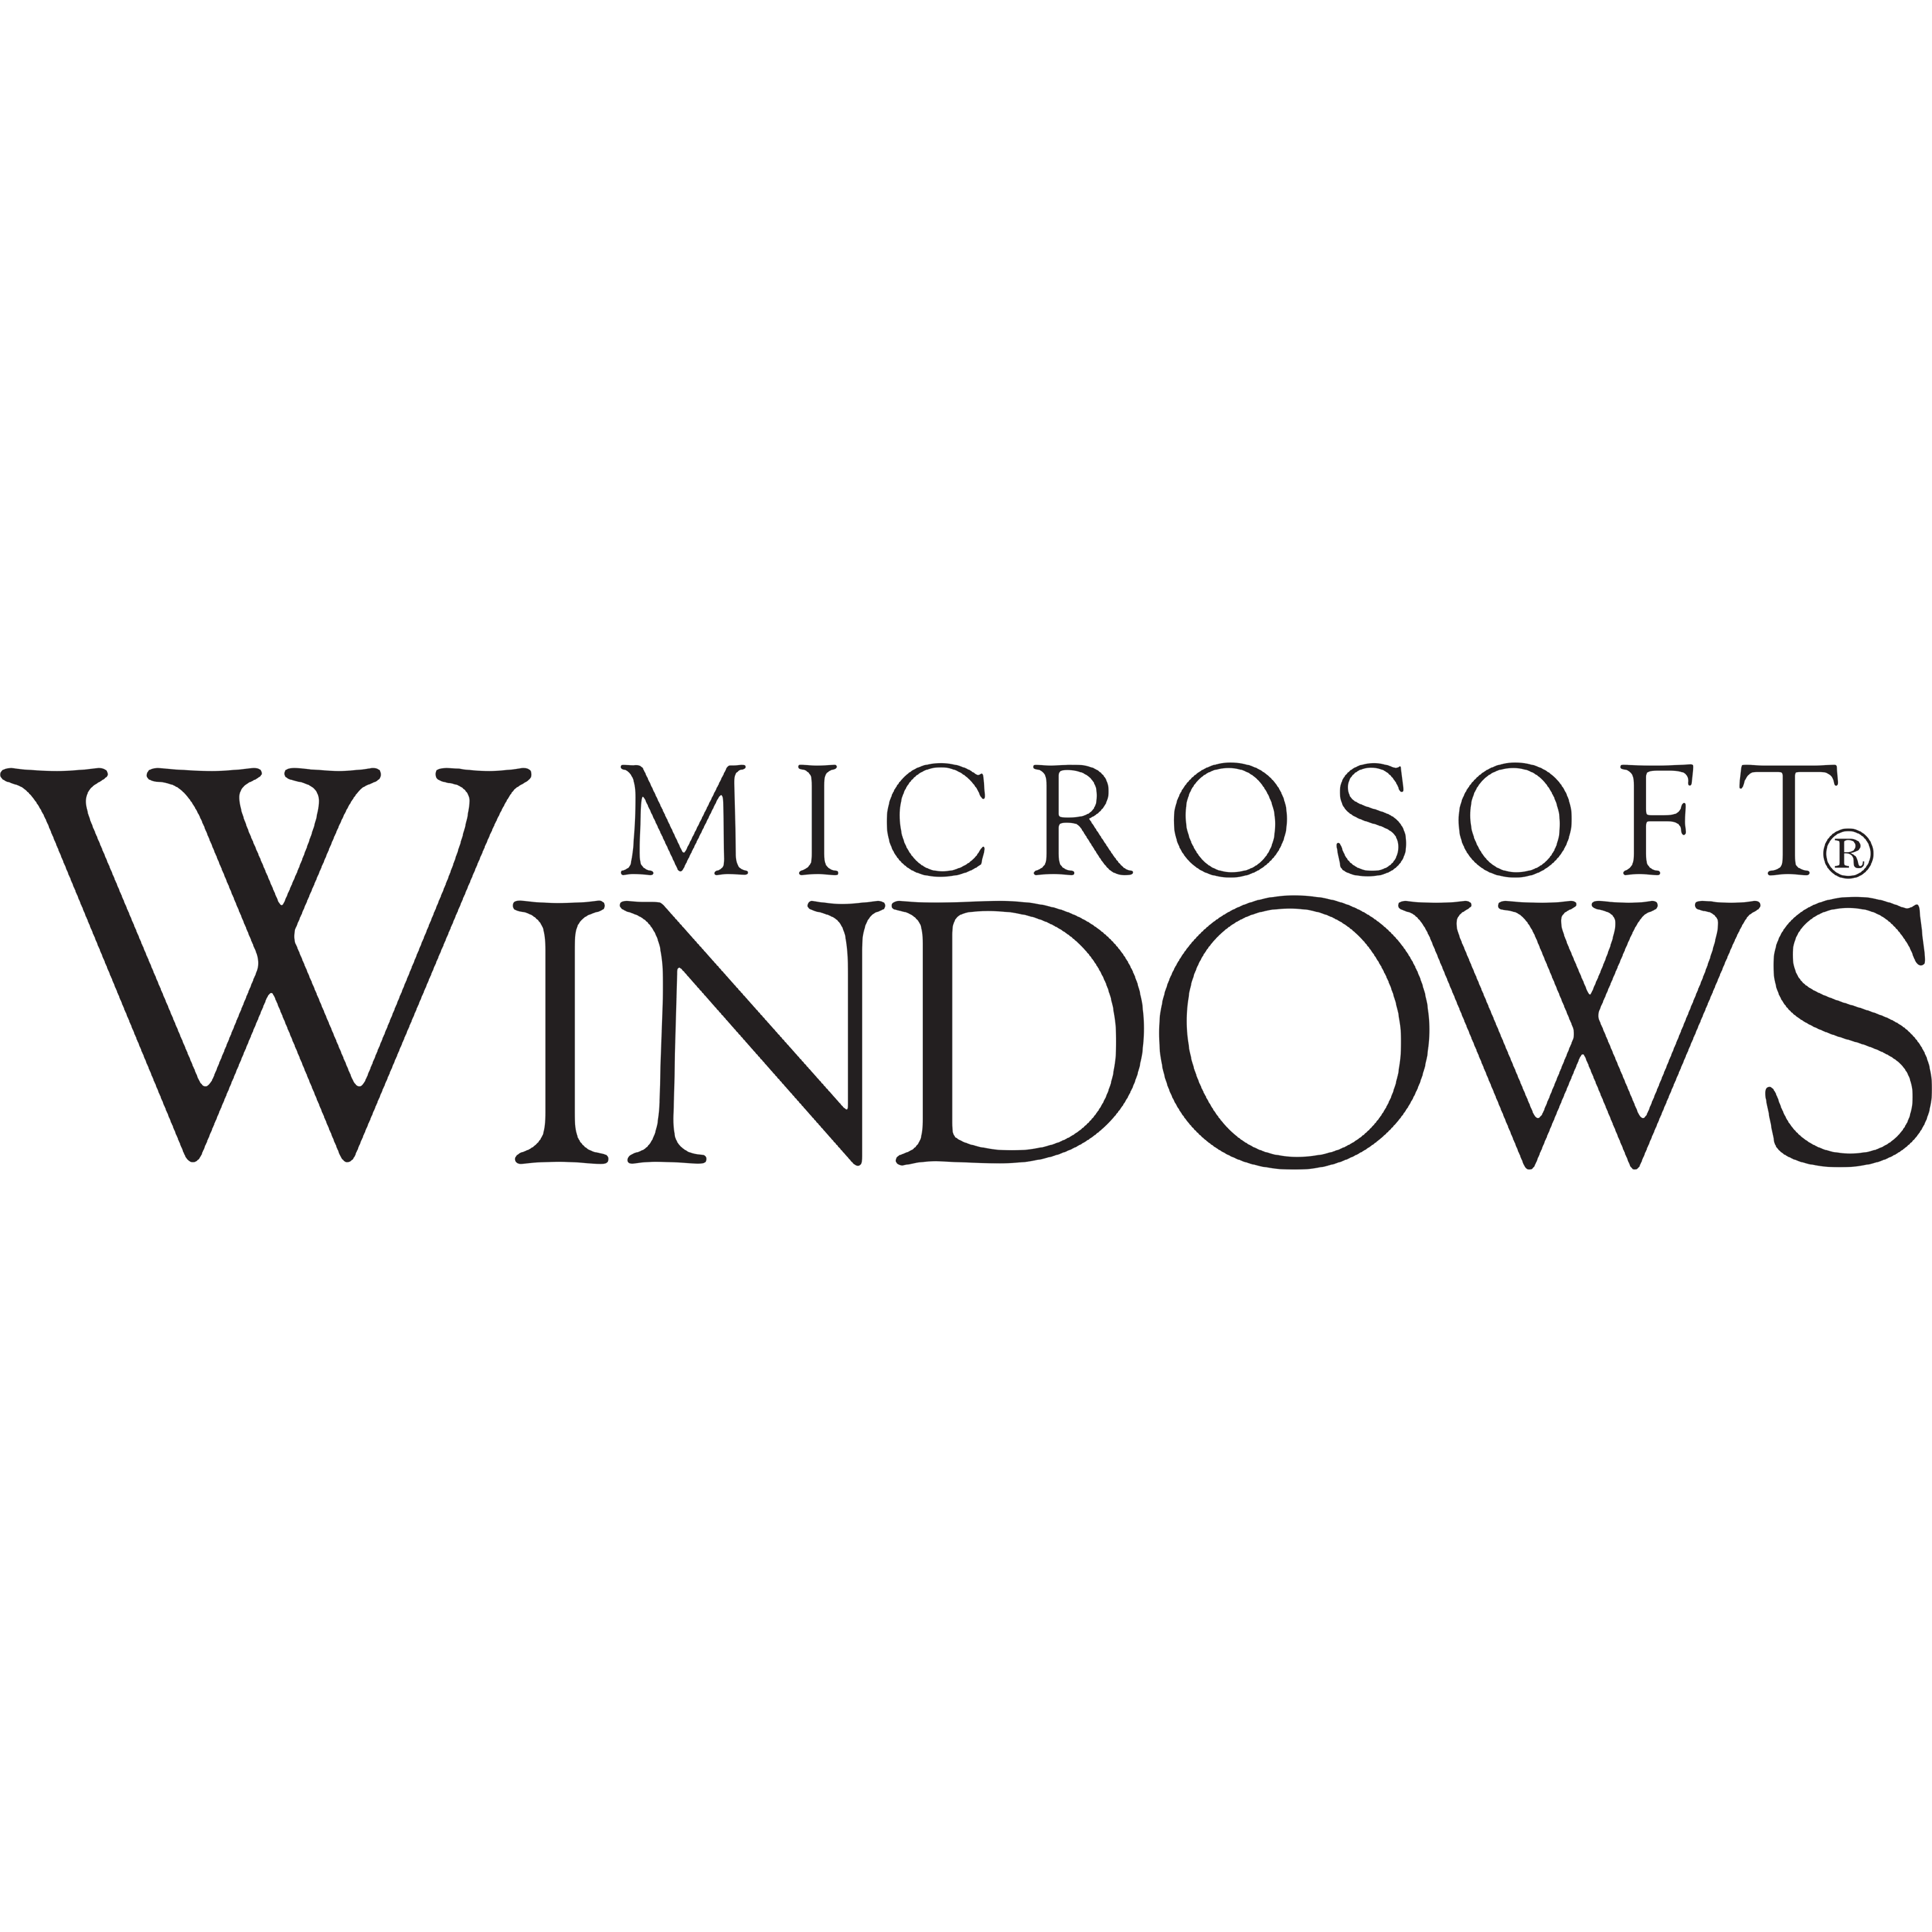 Microsoft Windows 1985 Logo Transparent Picture